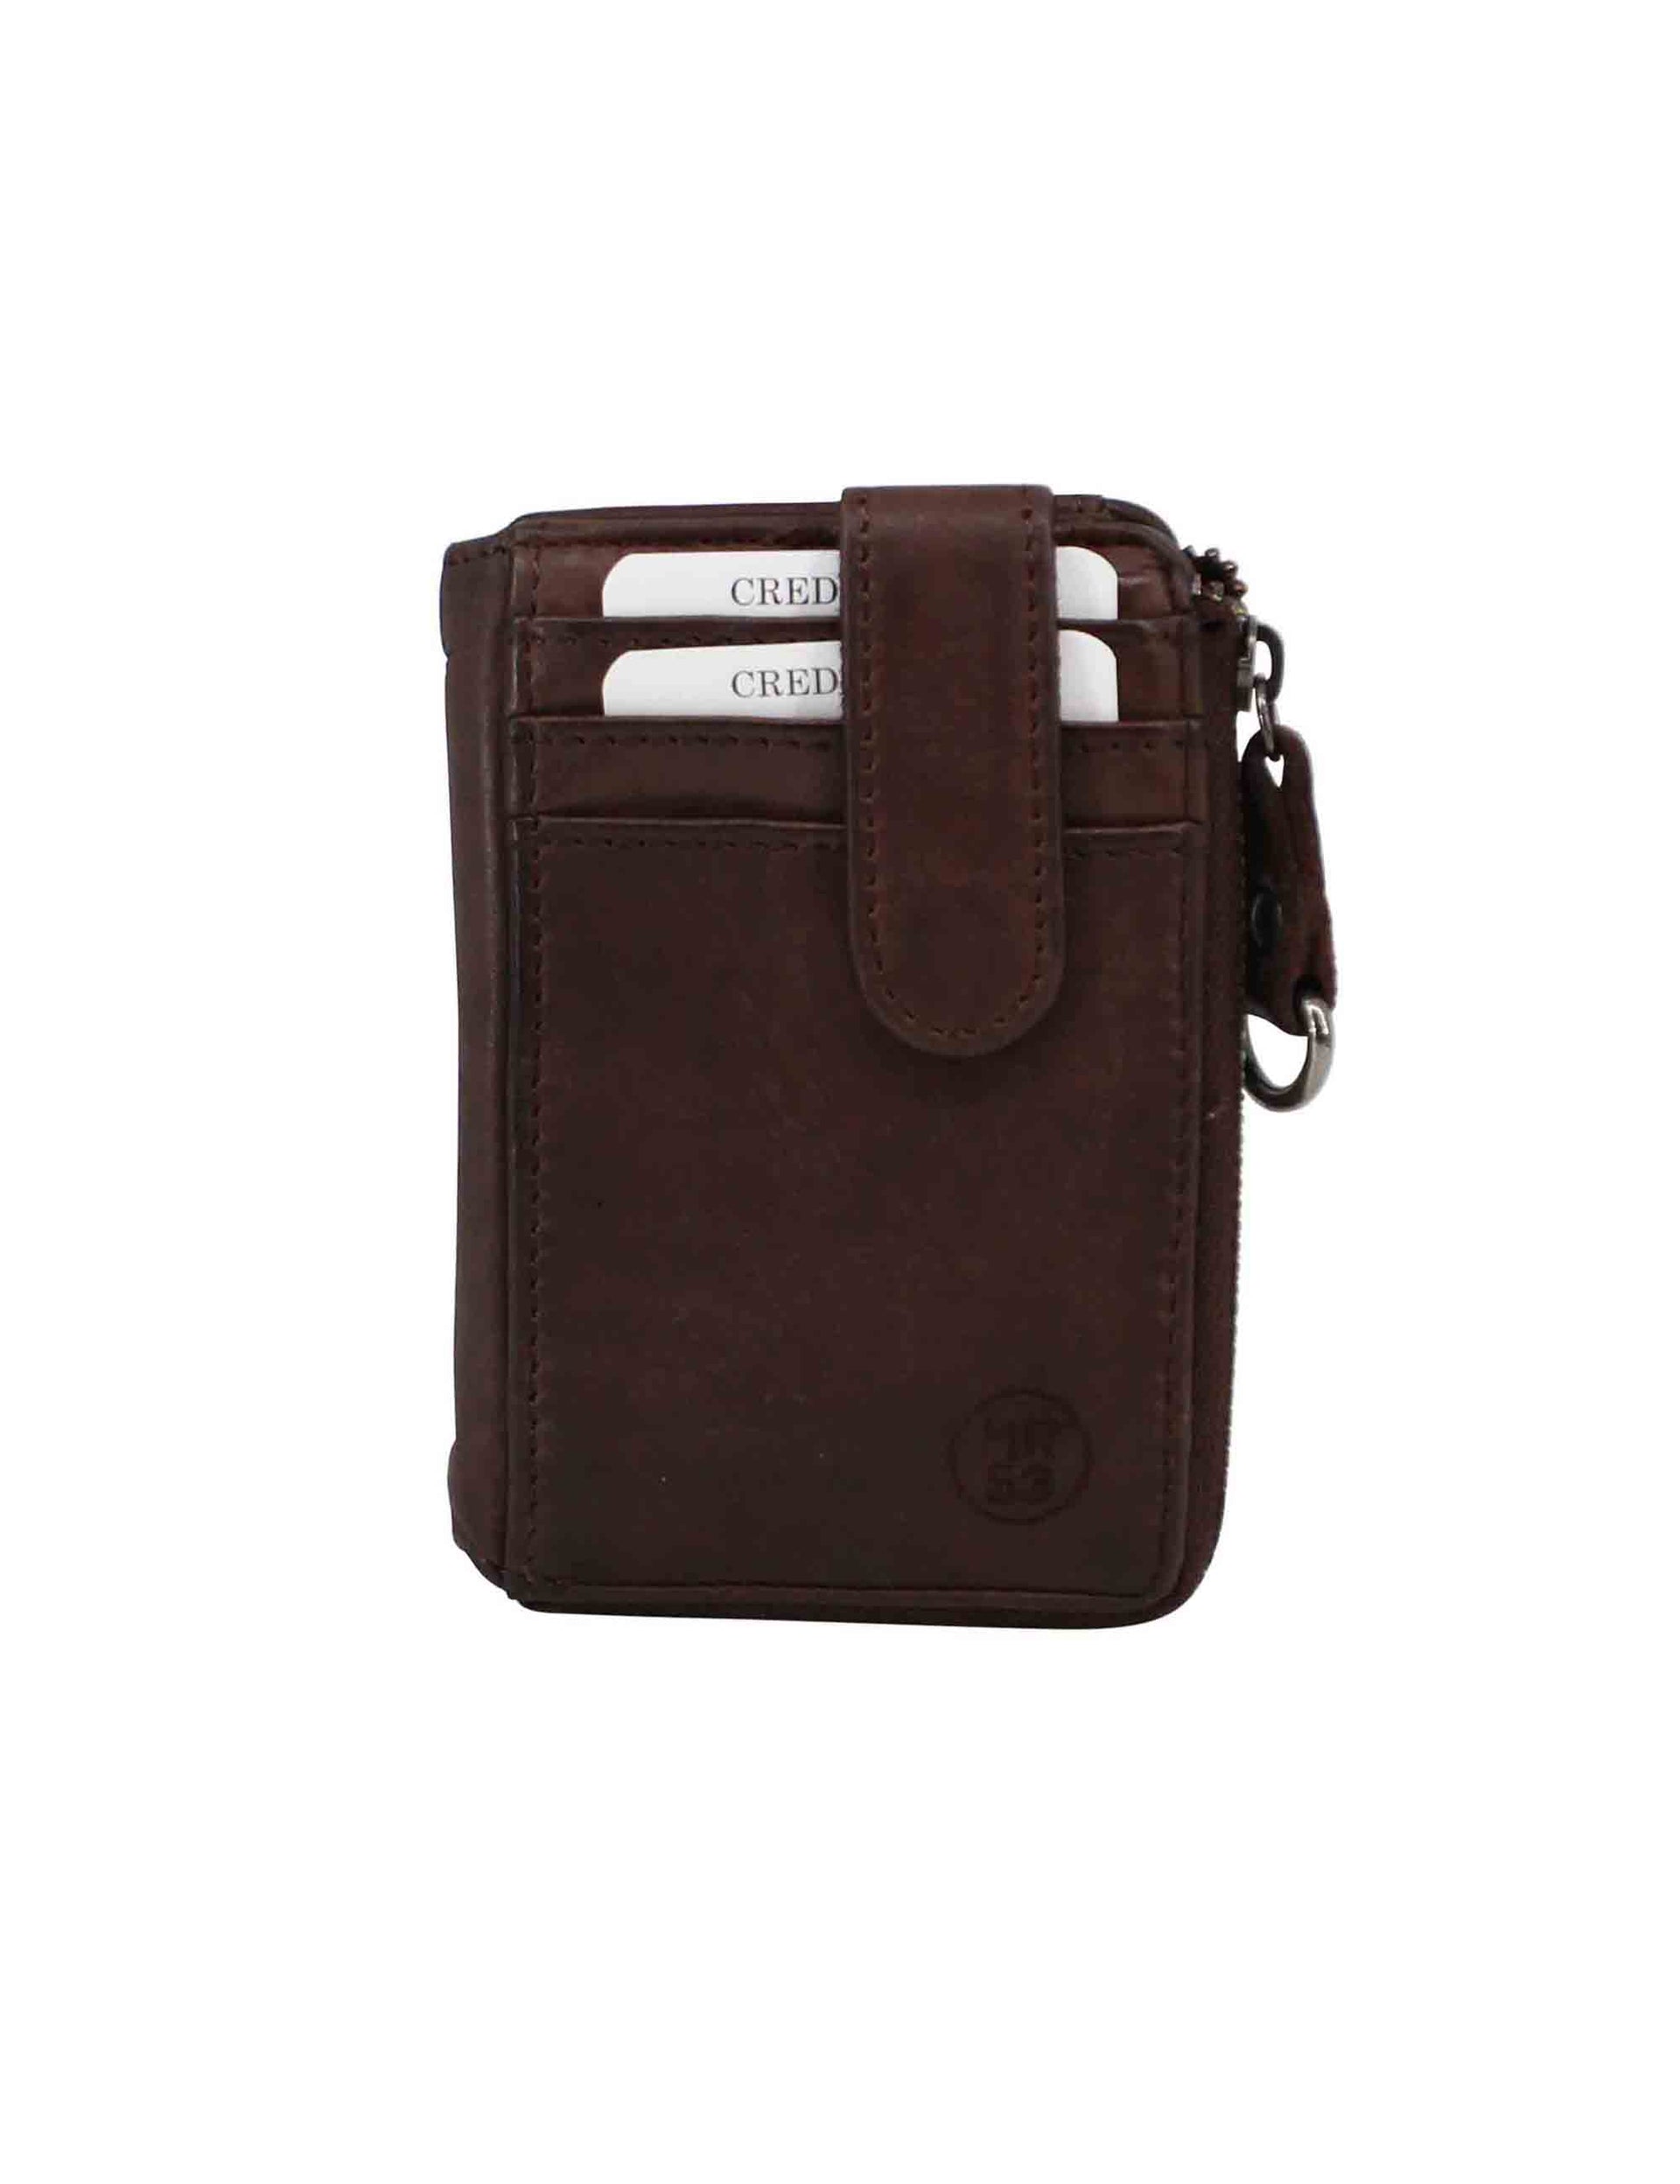 Men's card holder with zip in dark brown vintage leather